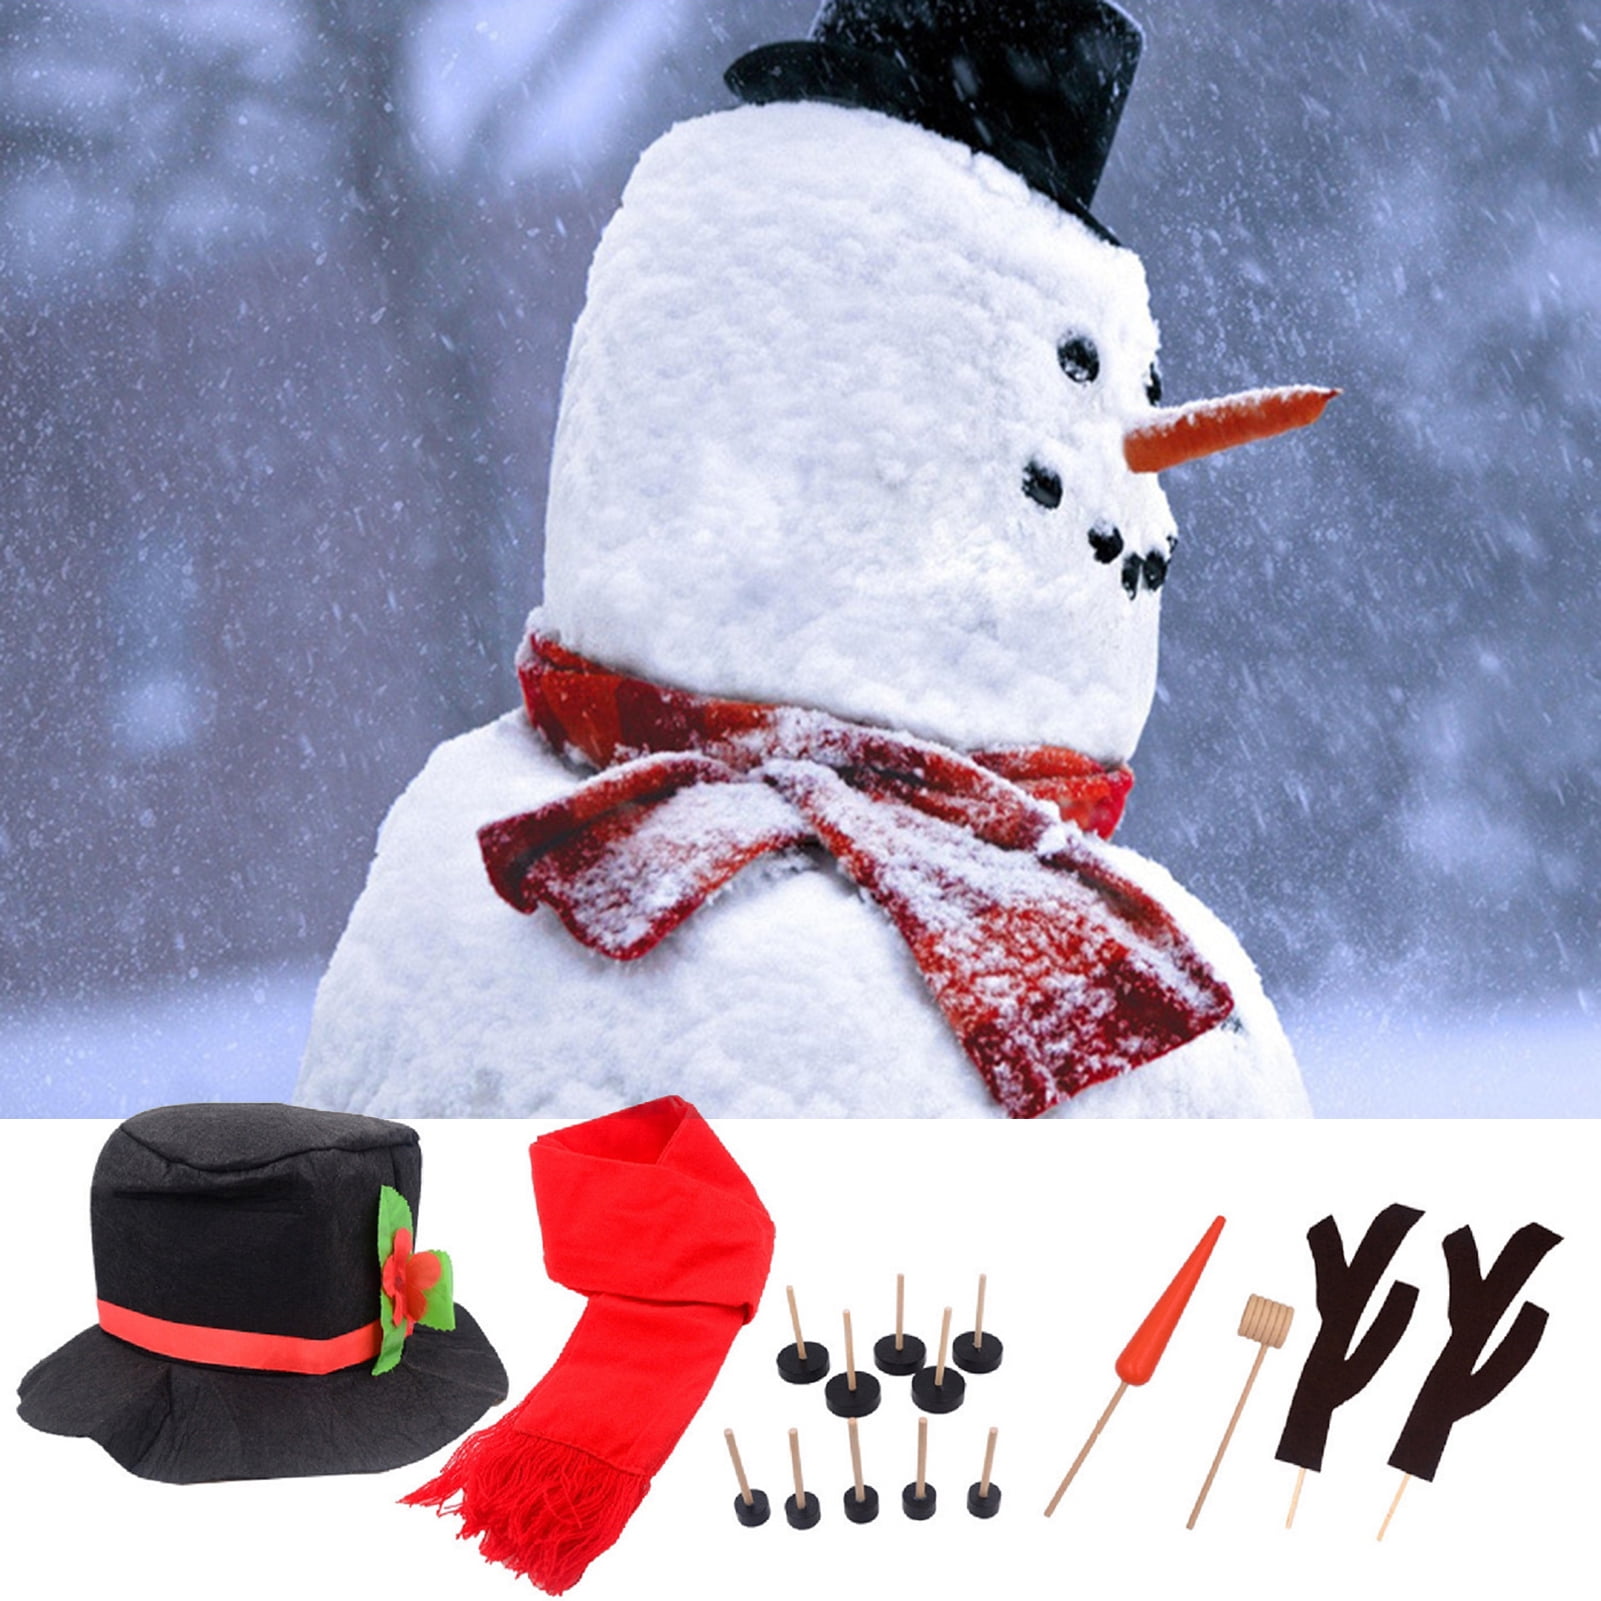 jojofuny 15pcs Snowman Tools Snowman Kit for Kids Outdoor Christmas Snowman  Props Snowman Hats for Crafts Build Snowman Kit Snowman DIY Ornament Kit